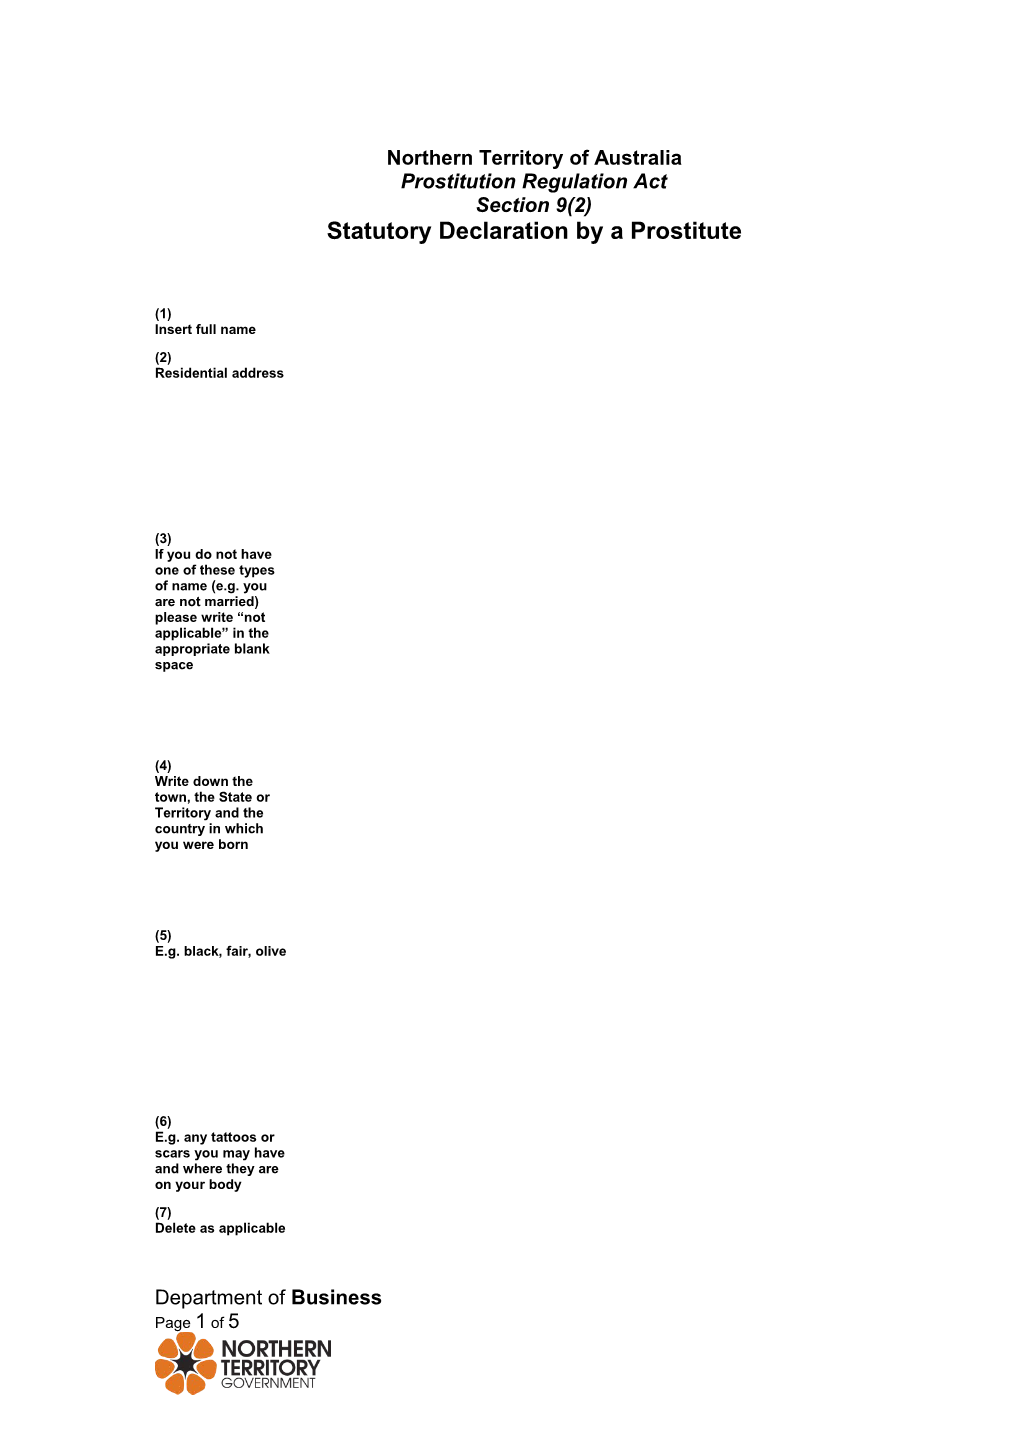 Statutory Declaration by a Prostitute